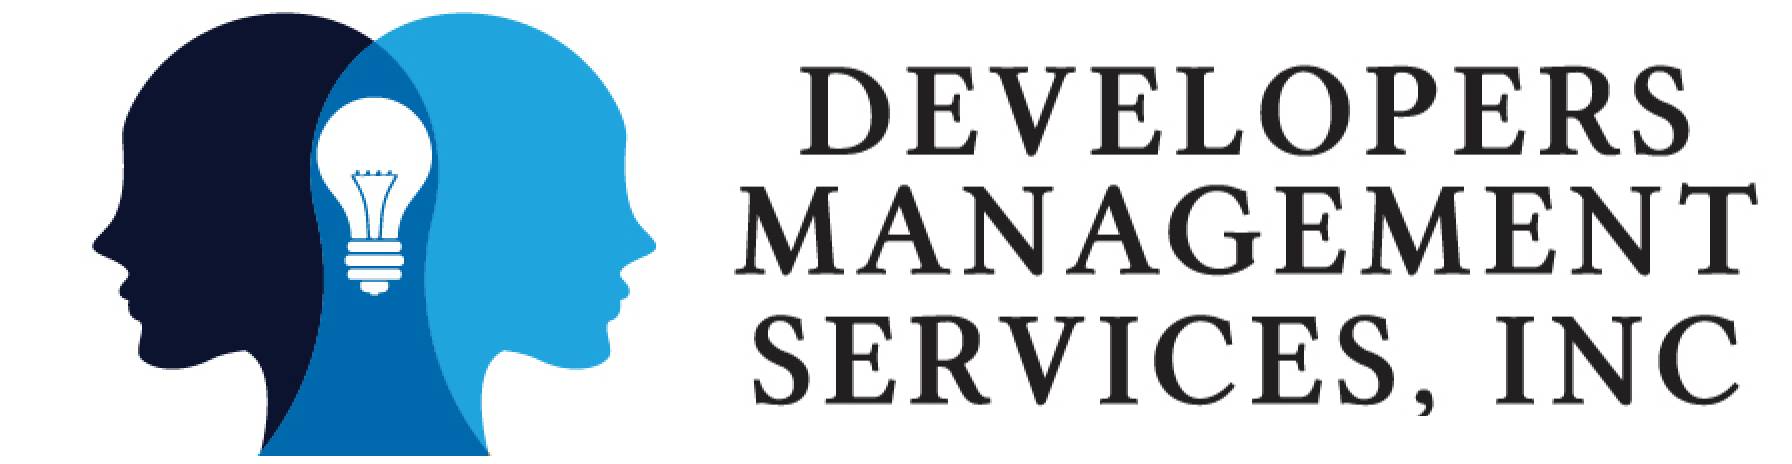 Developers Management Services, Inc.